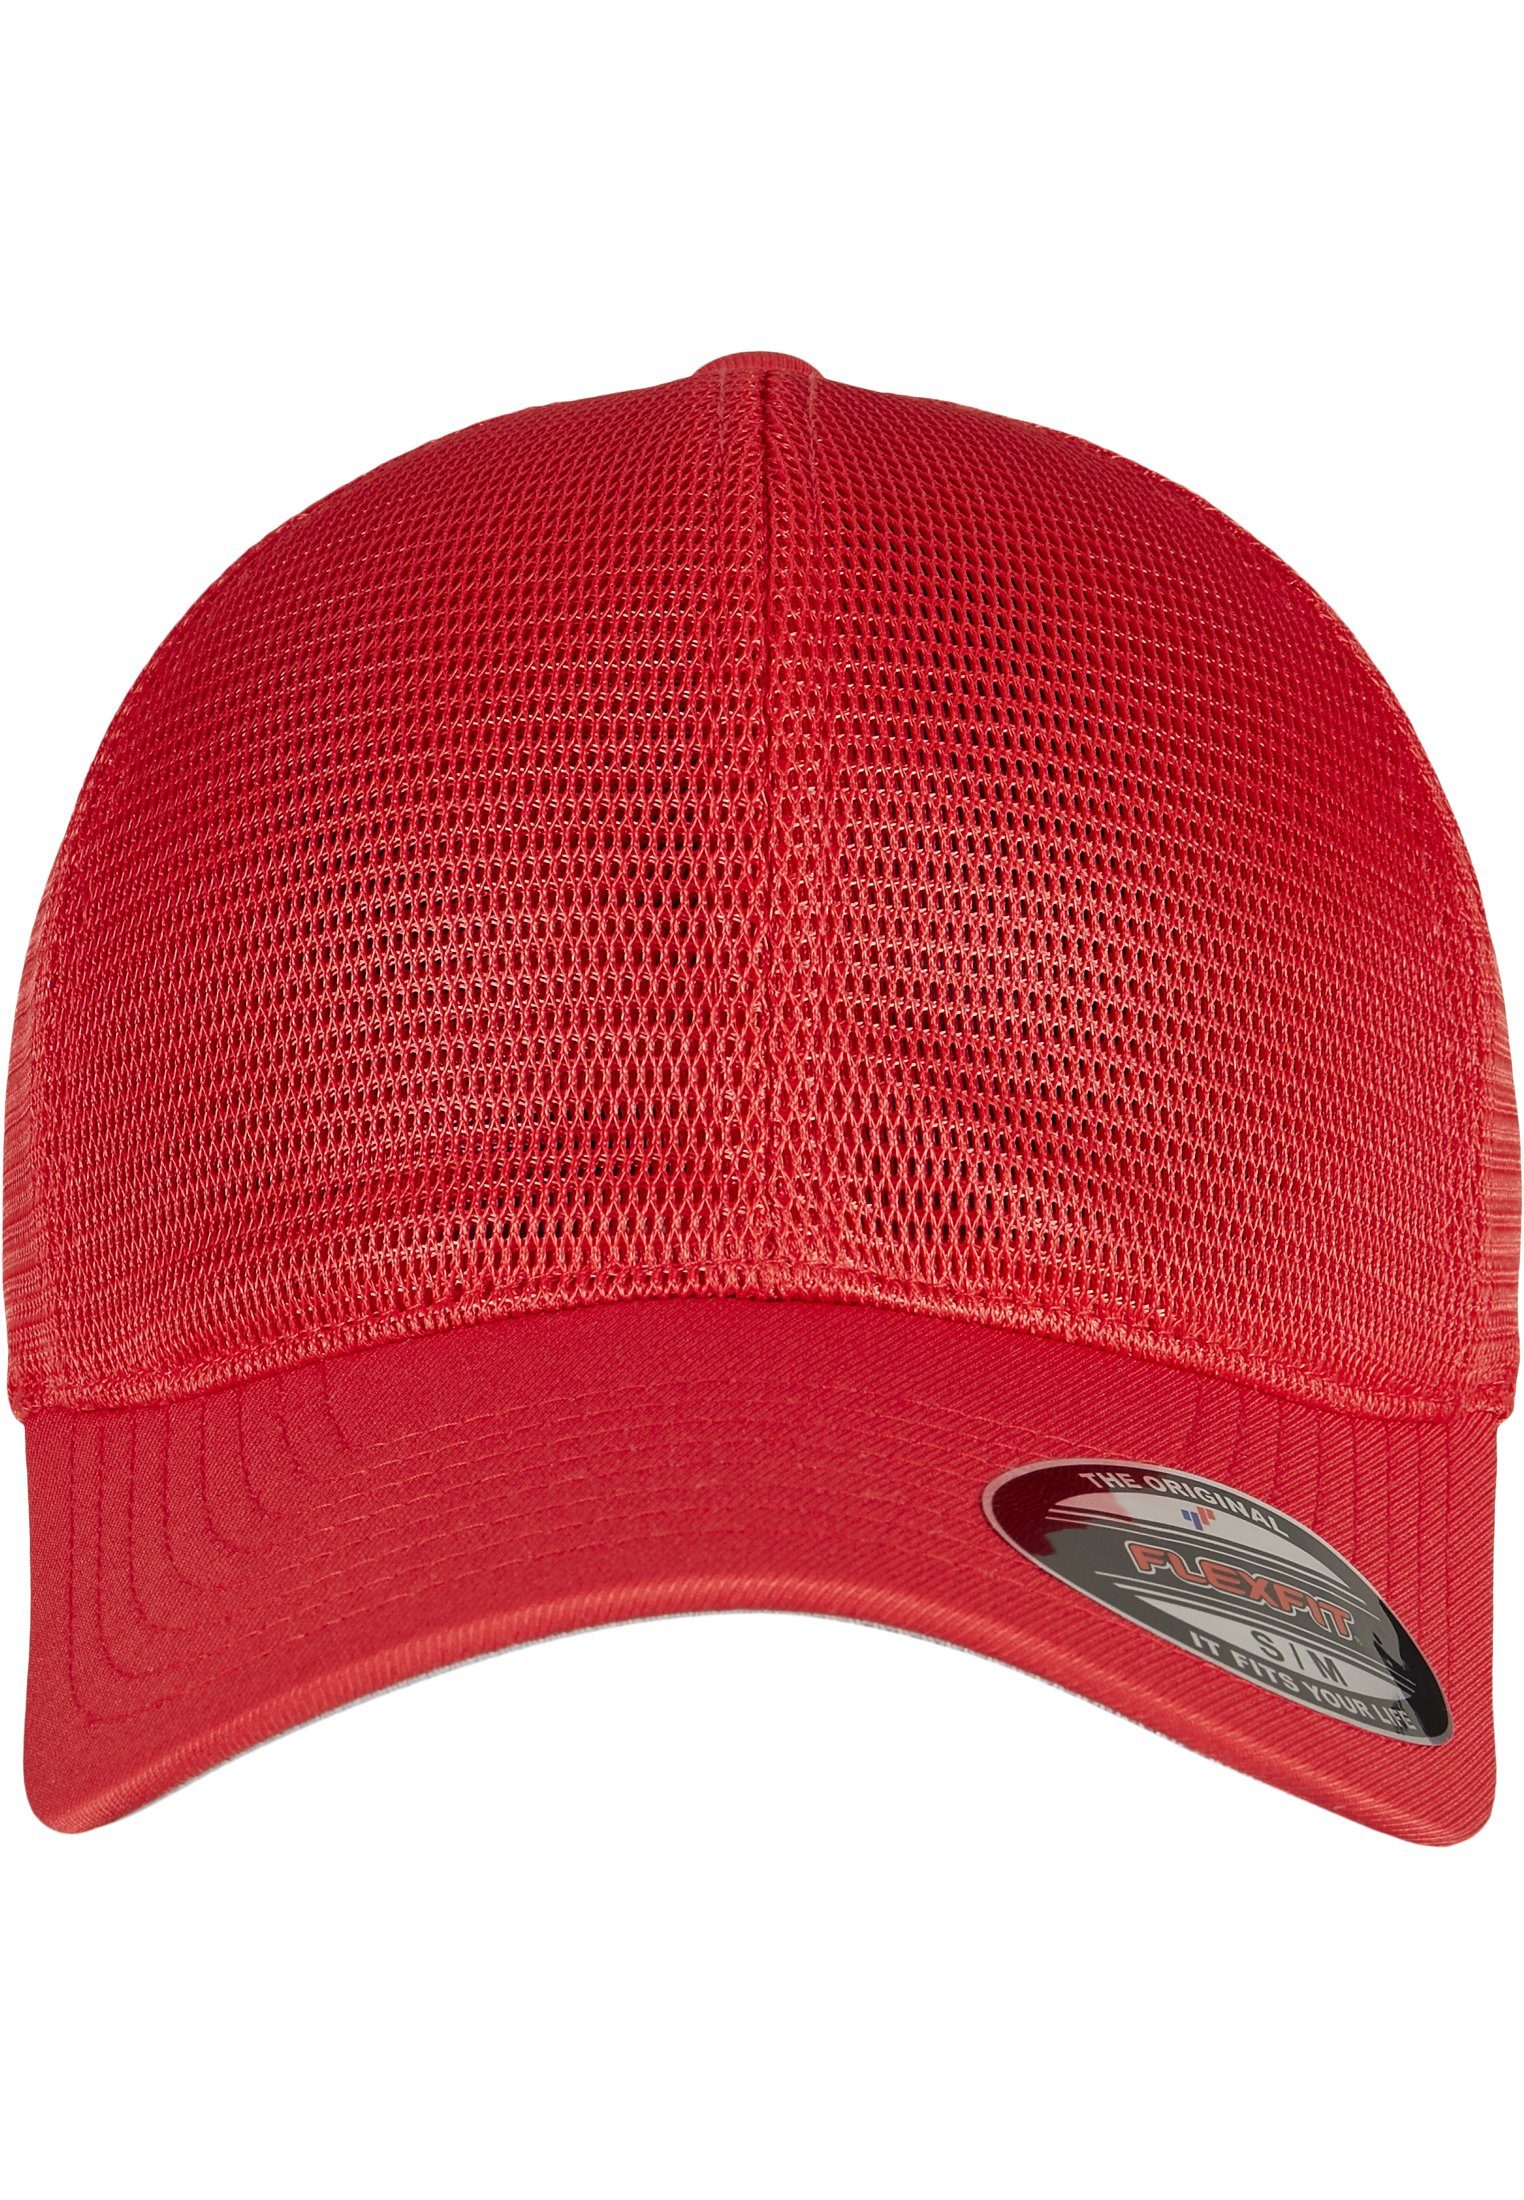 CAP Cap 360 Flex Flexfit FLEXFIT OMNIMESH red Accessoires